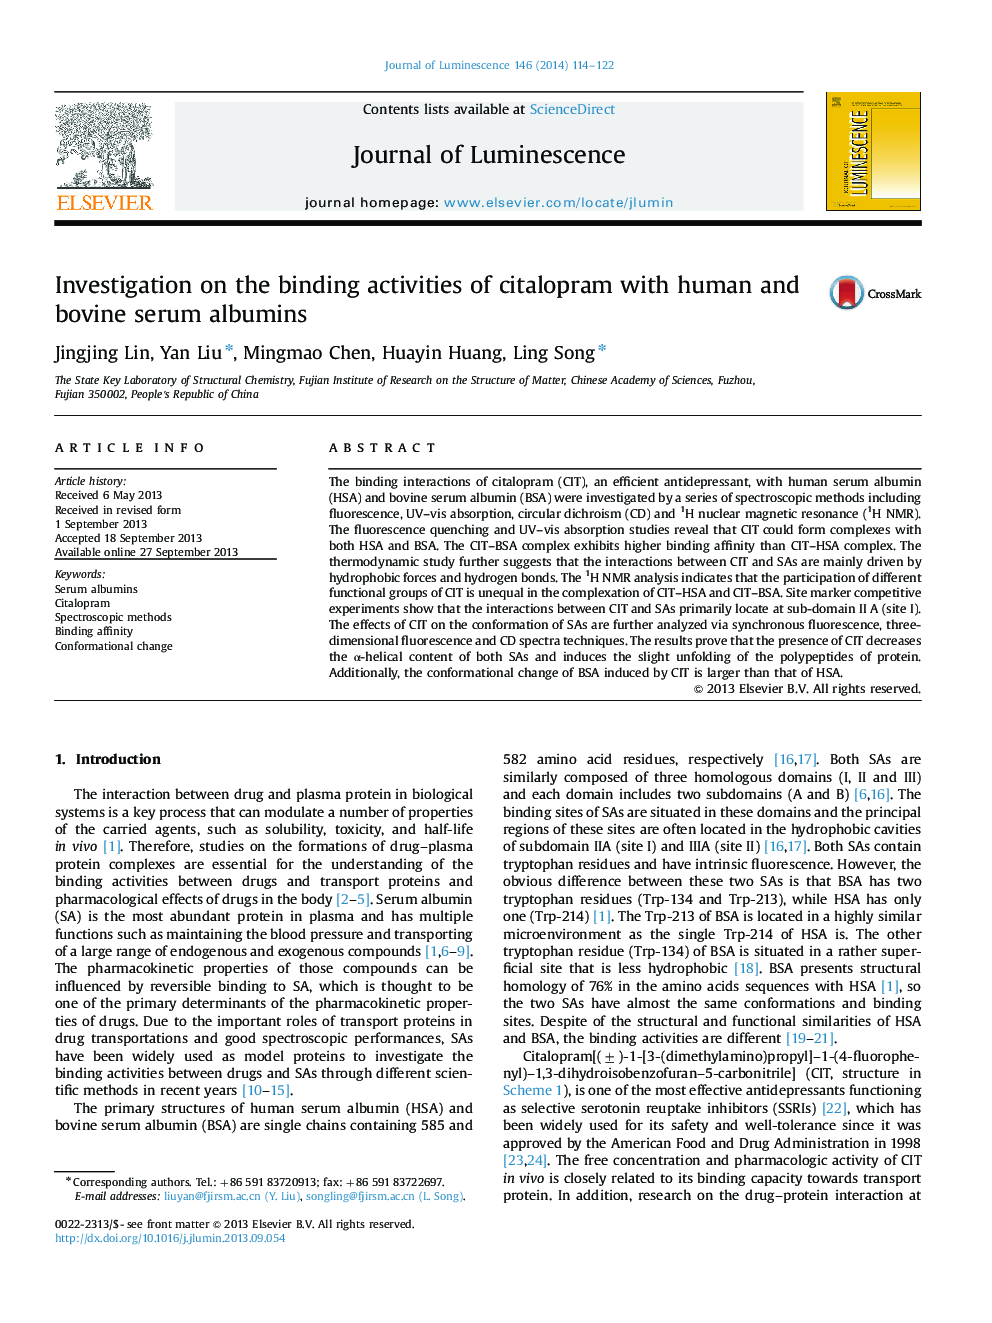 Investigation on the binding activities of citalopram with human and bovine serum albumins